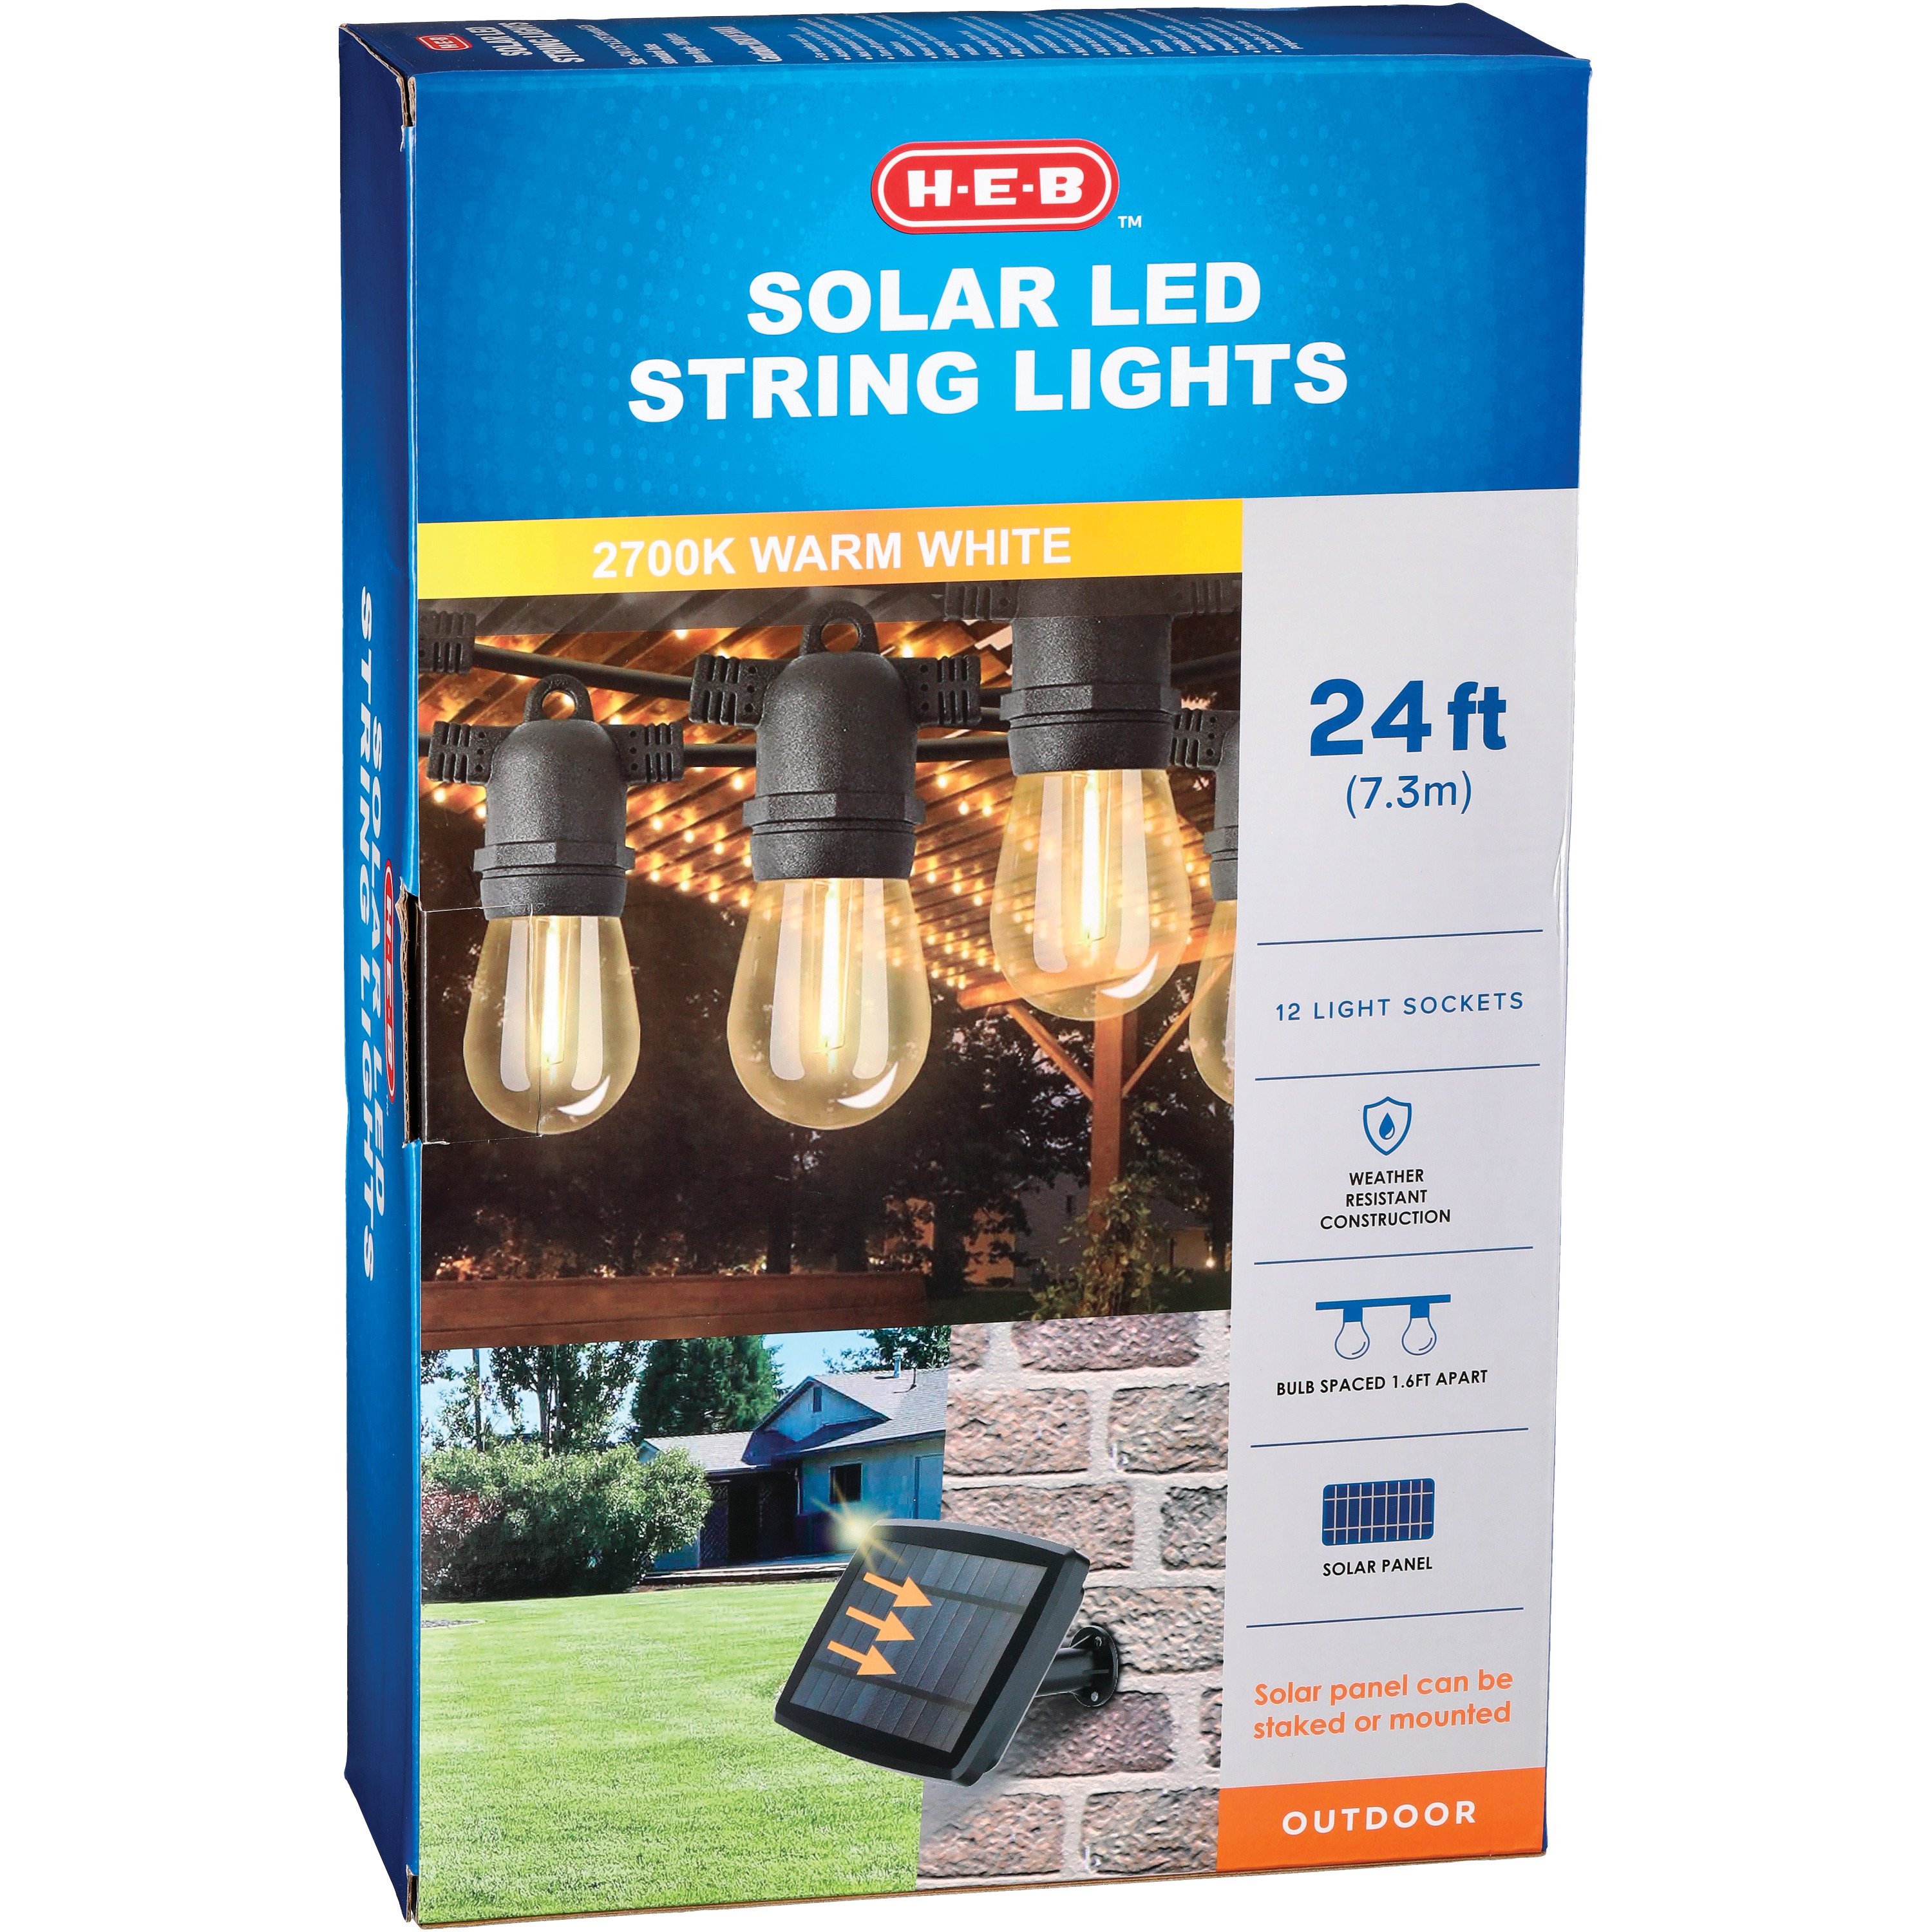 H-E-B Solar-Power LED String Lights - Shop Seasonal Decor at H-E-B